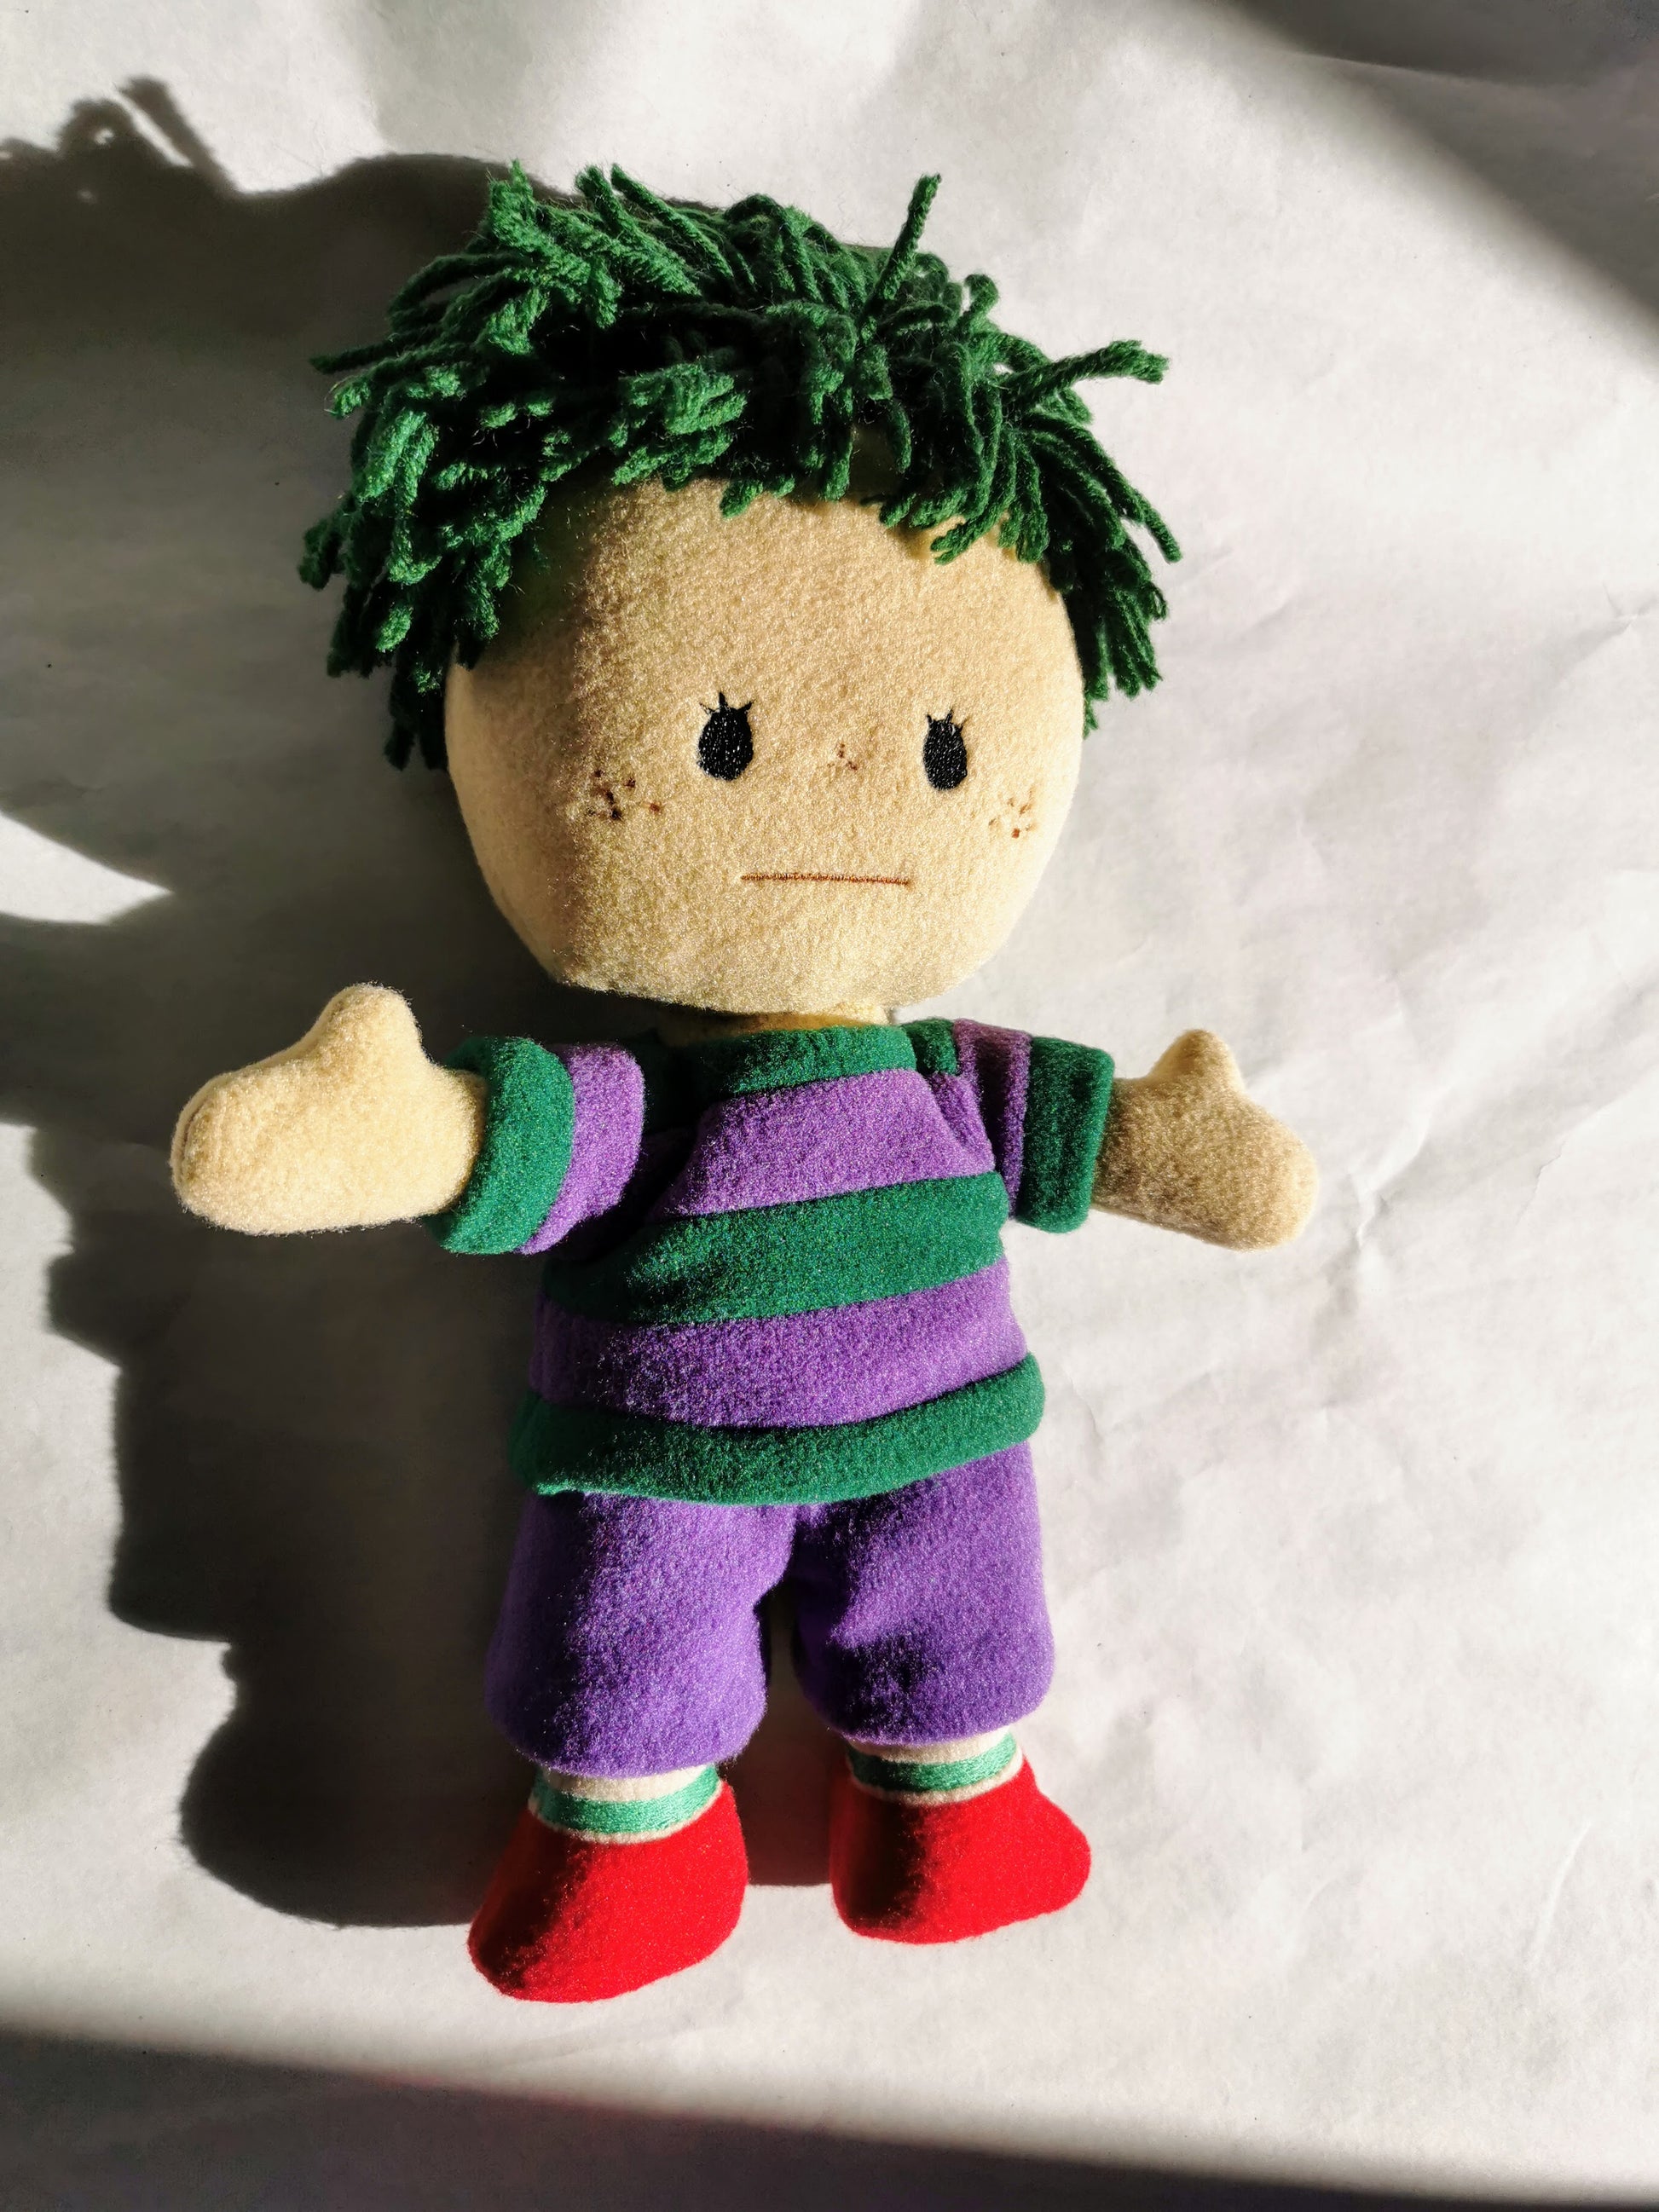 Toy story 4 boy doll replica plush